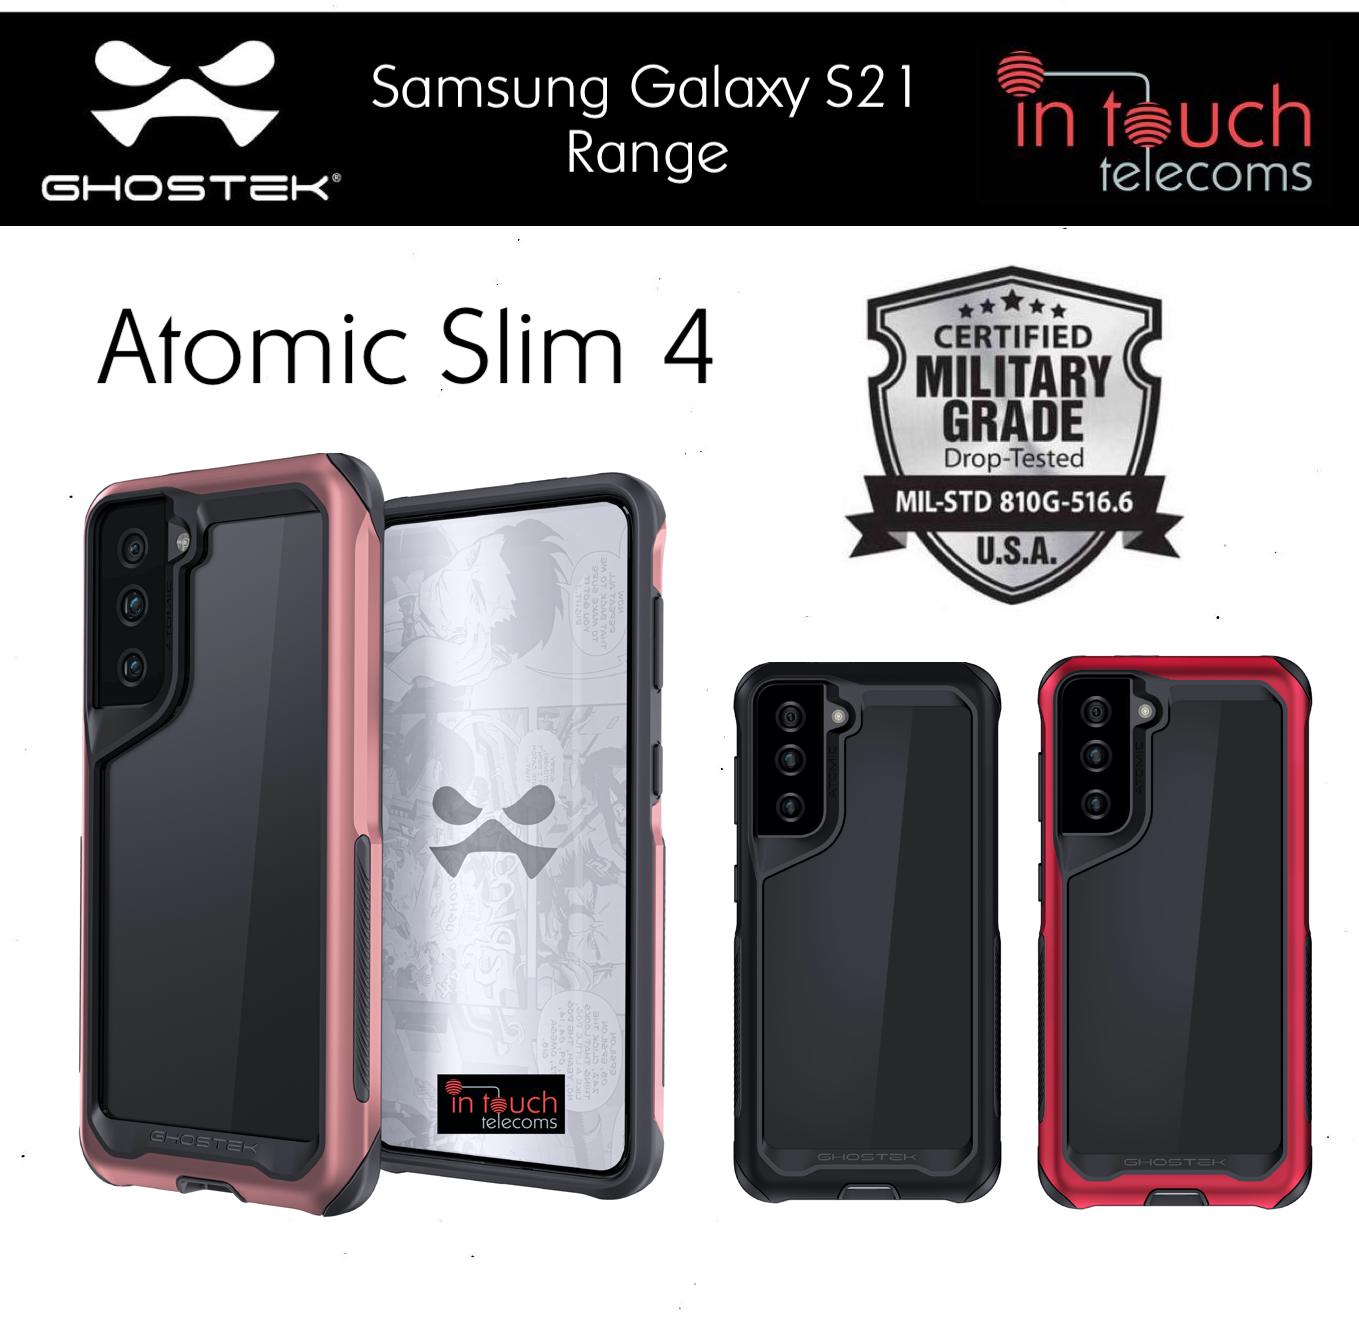 Ghostek Atomic Slim 4 Case for Samsung Galaxy S21 | Military Grade